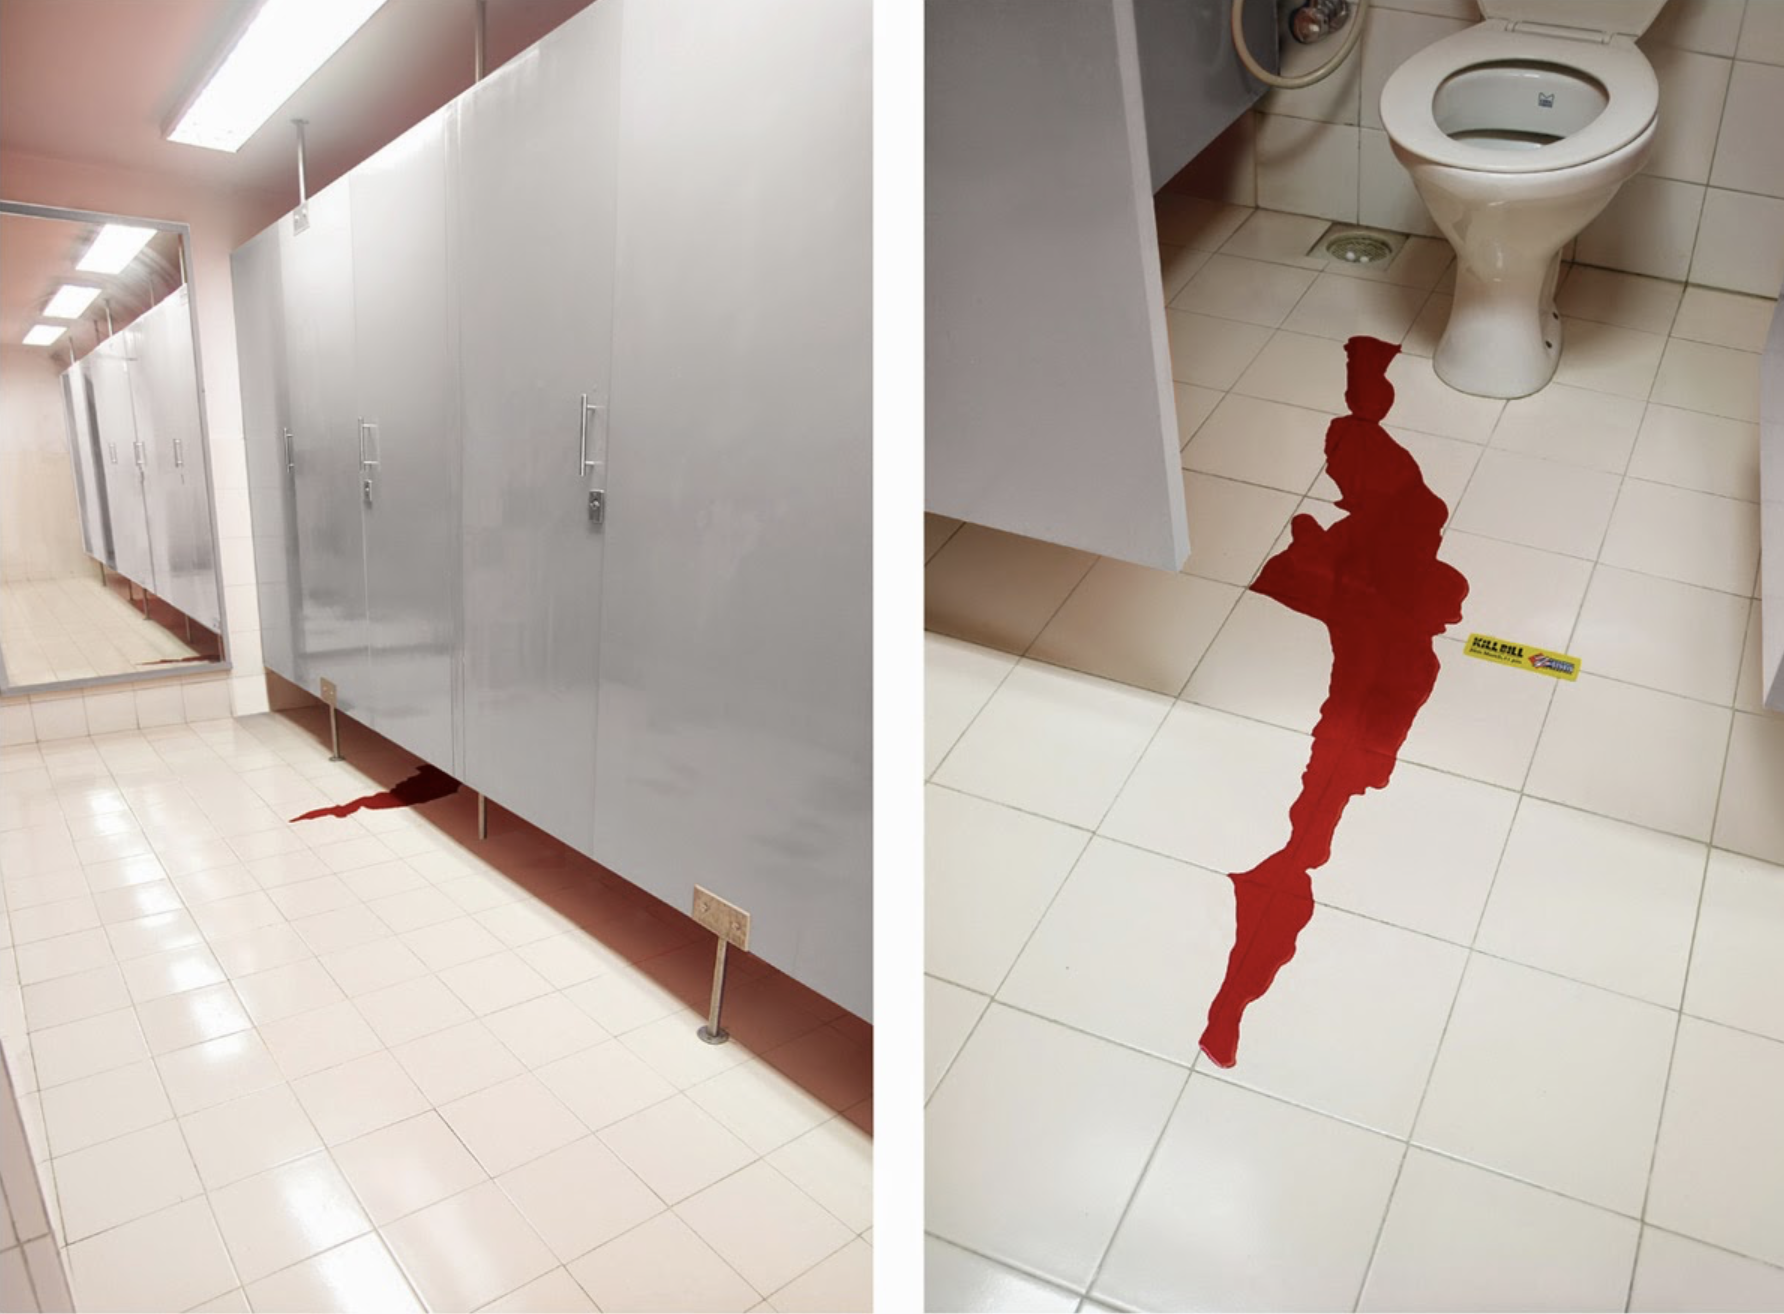 This Kill Bill ambient floods a public bathroom